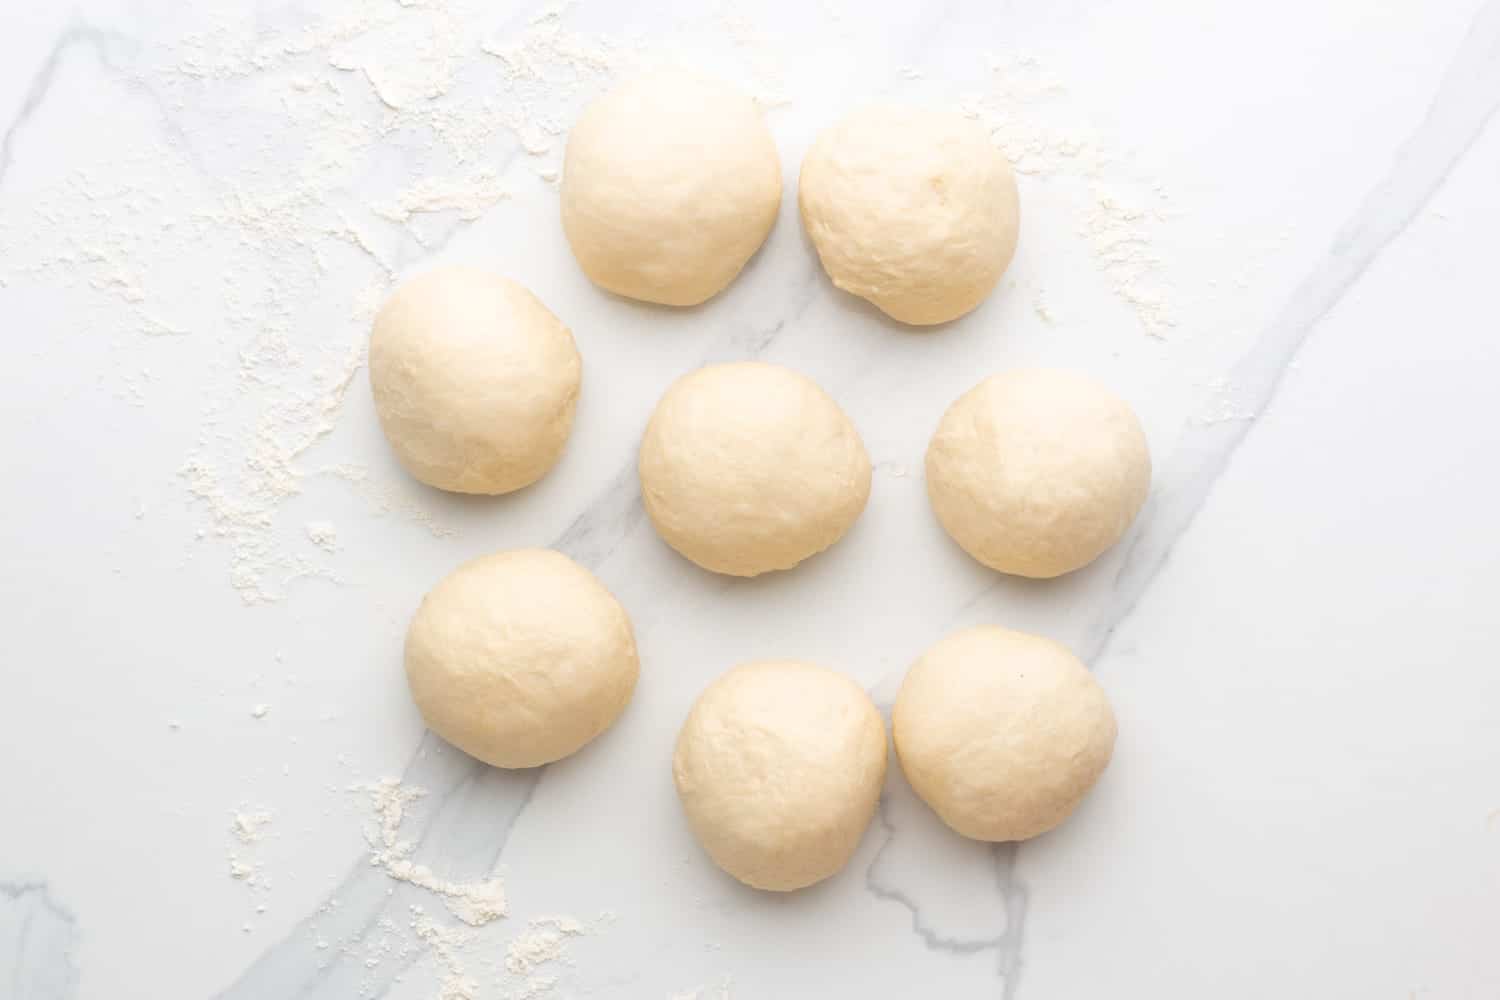 Dough divided into 8 balls